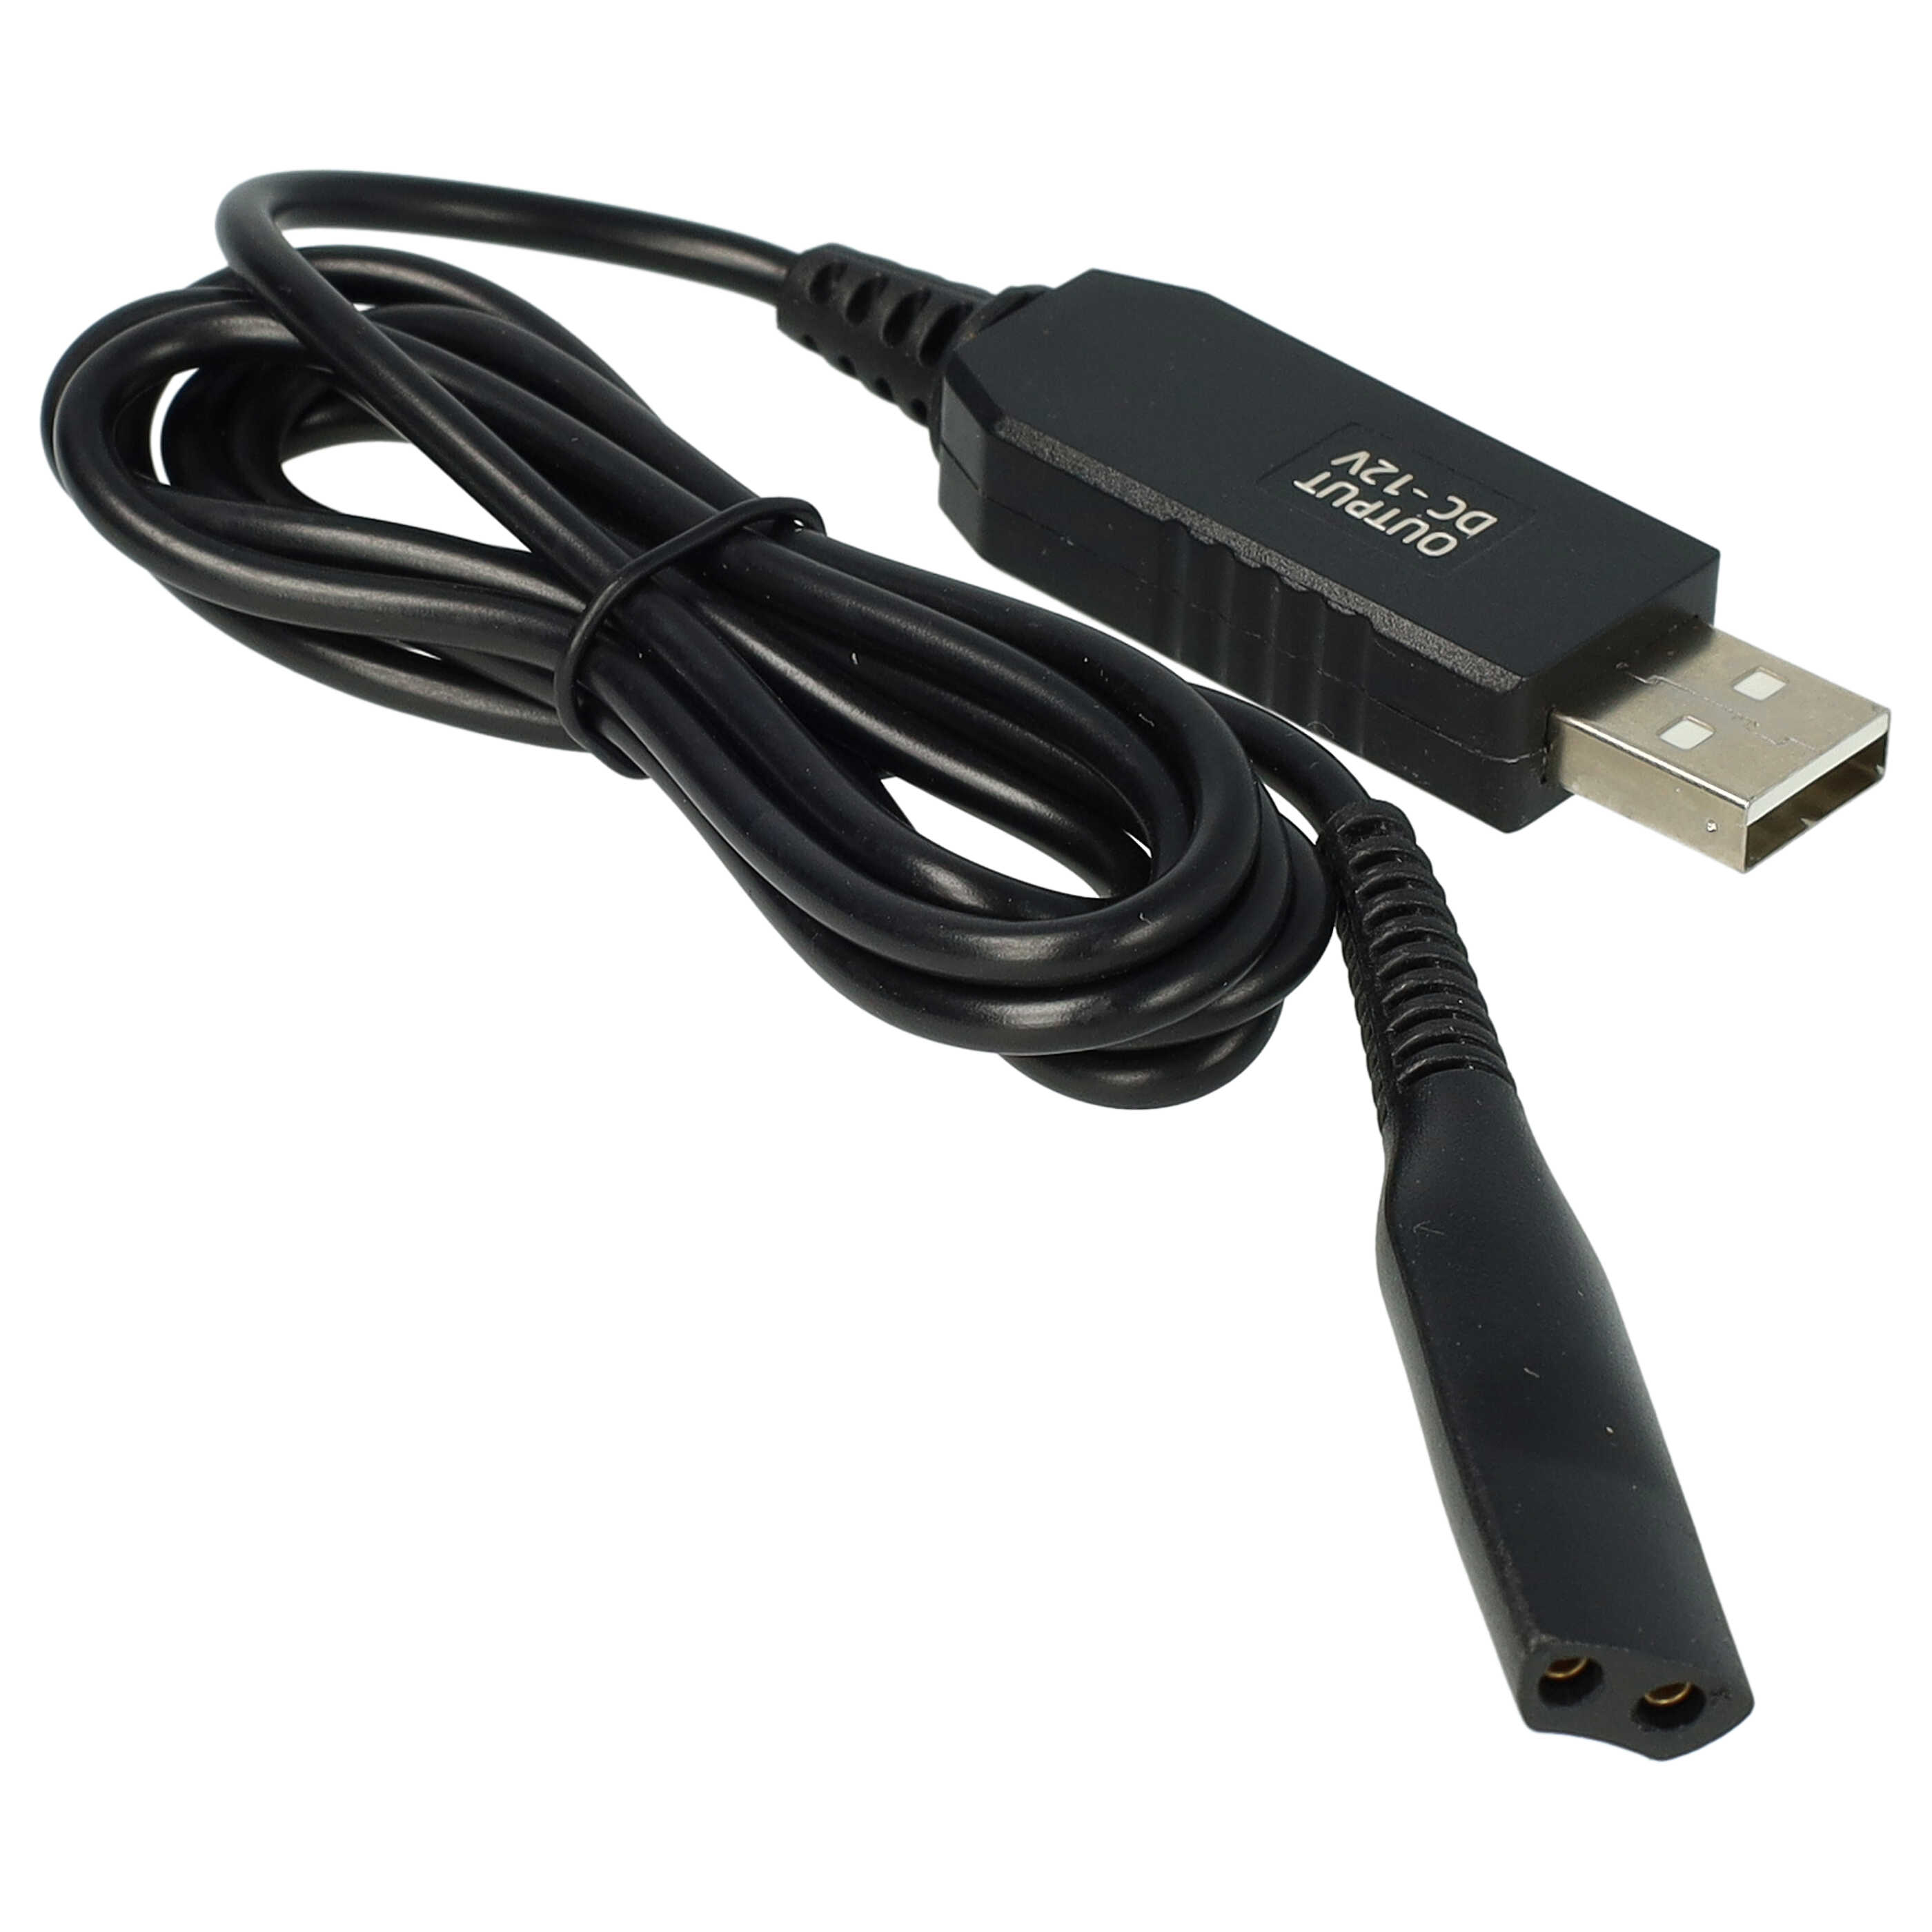 Caricabatterie USB per rasoio, epilatore, spazzolino Braun, Oral-B HC20 - 120 cm